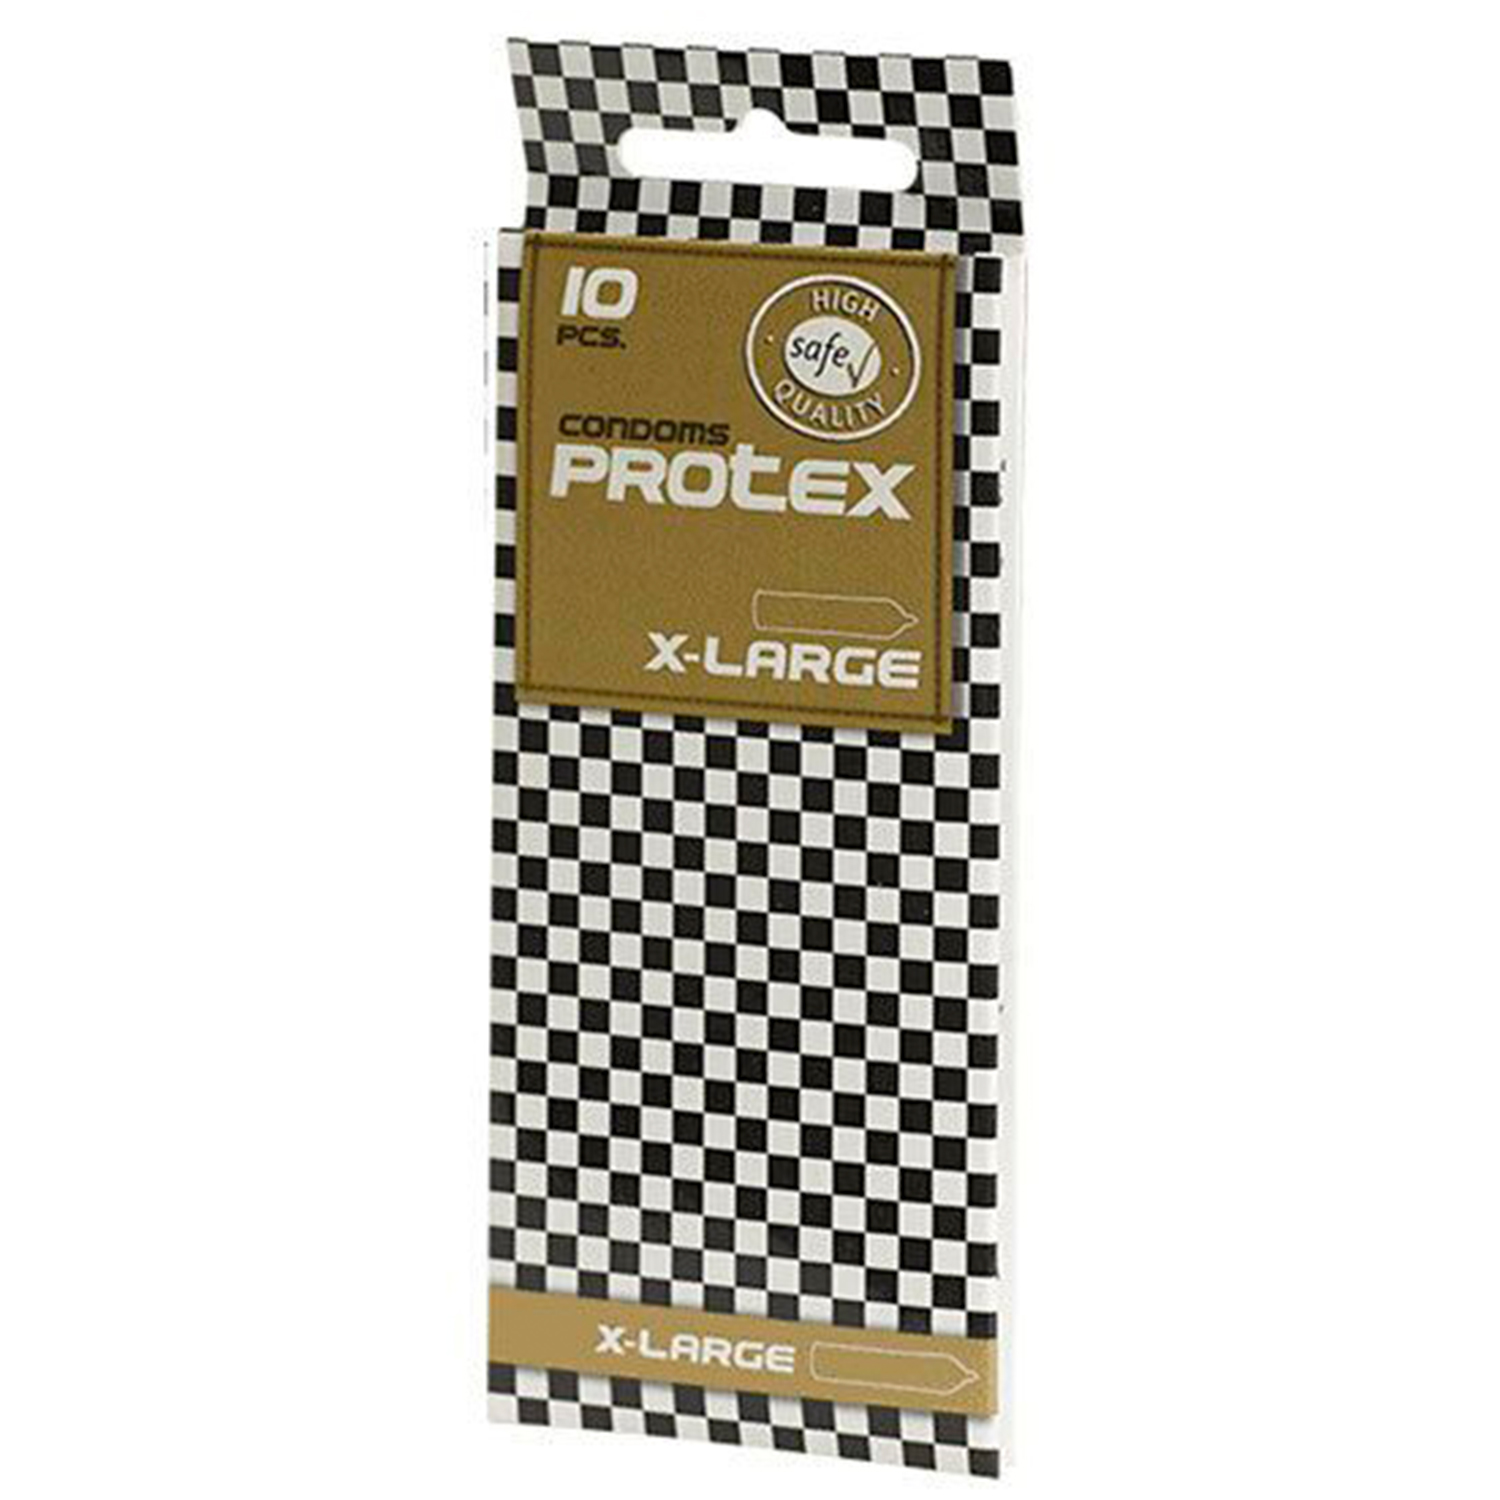 Protex X-Large Kondomer 10-pack - Protex